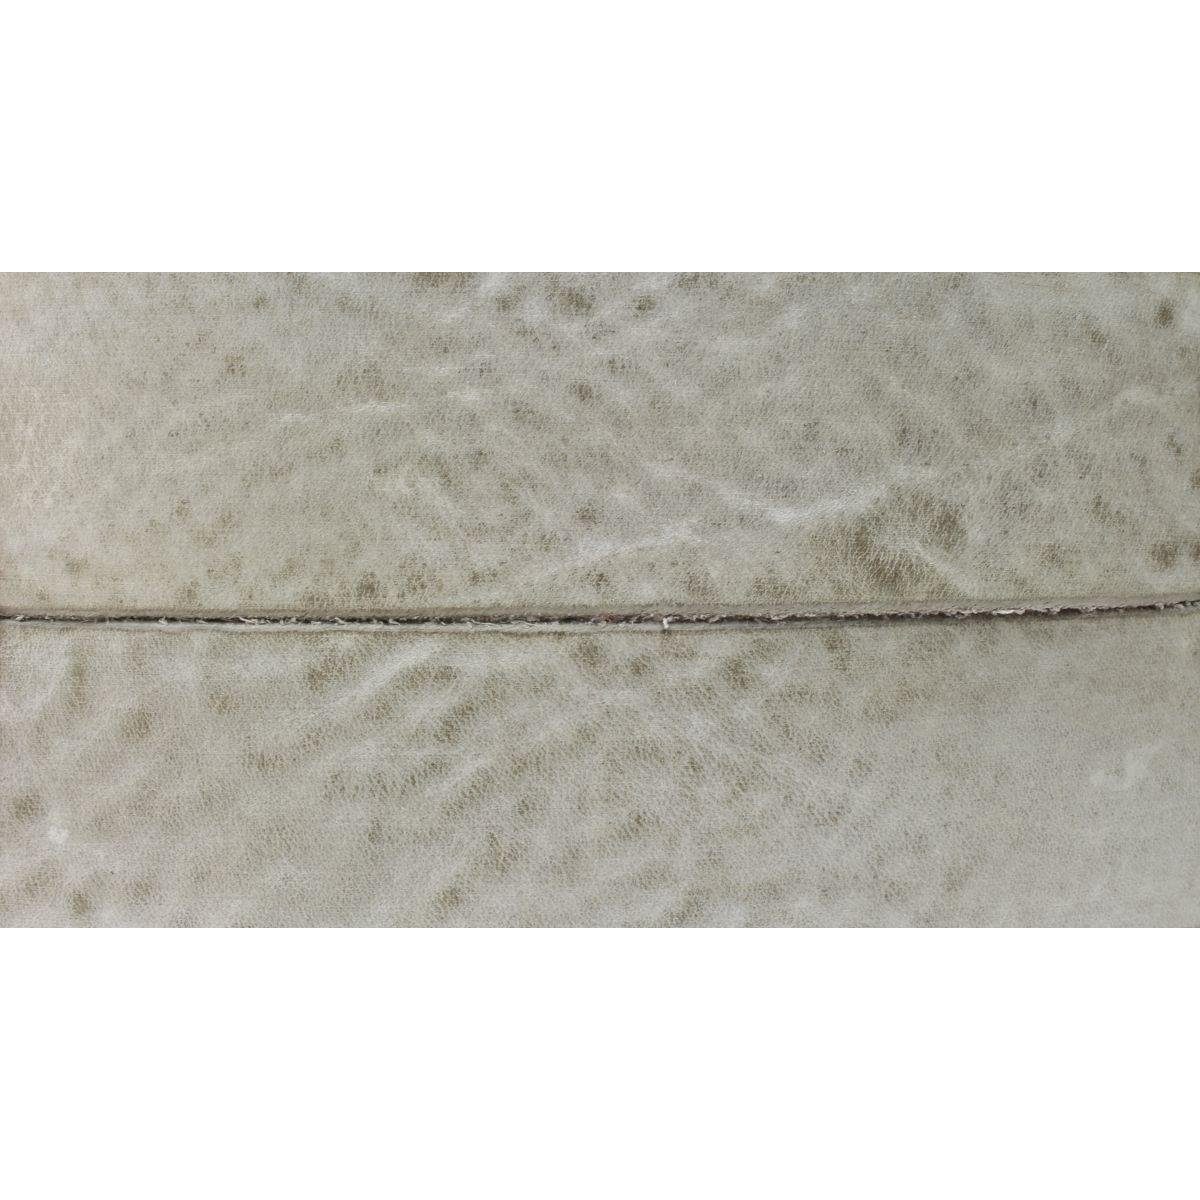 mit Ledergürtel Altmessing Vollrindleder Gürtelschnalle - altmessing 4 aus cm Mintgrün, BELTINGER Gürtel weichem